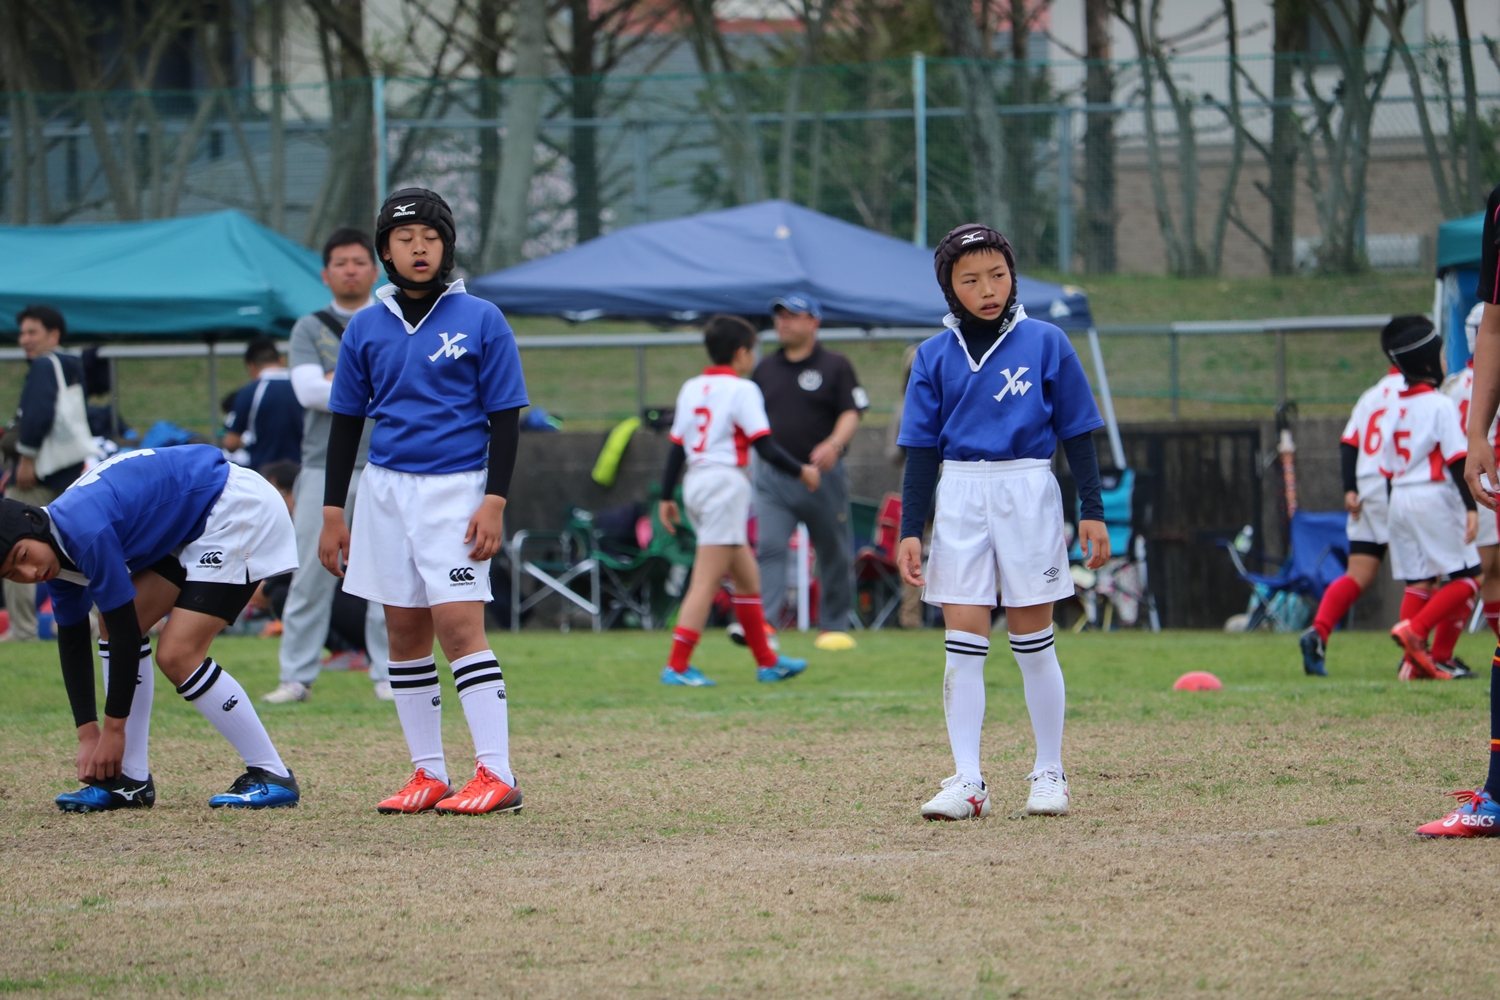 youngwave_kitakyusyu_rugby_school_kasugahai2016113.JPG